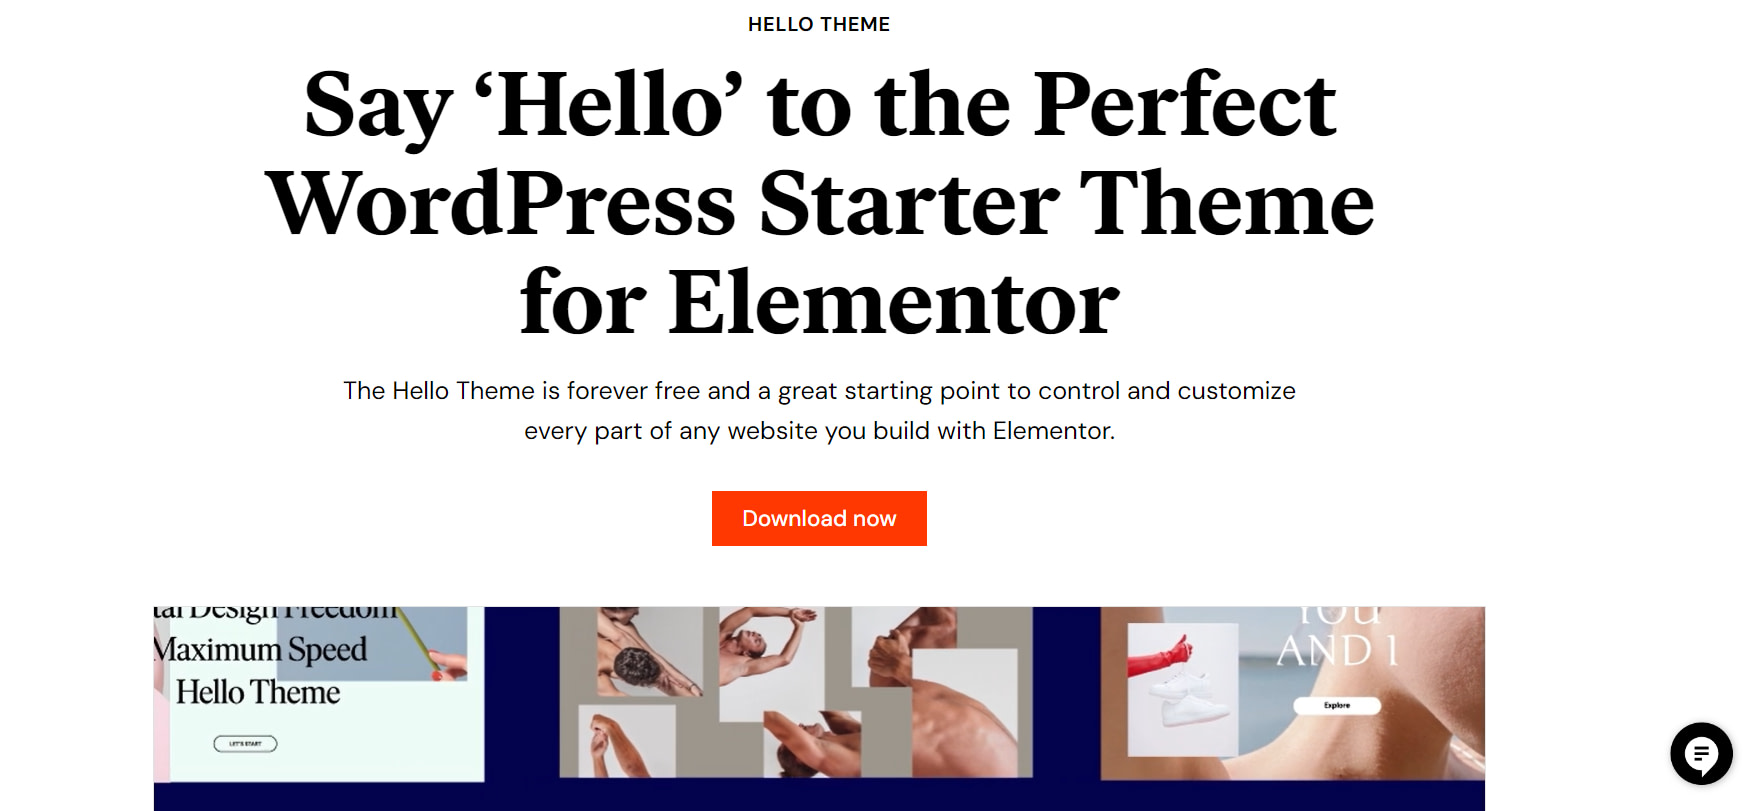 The Hello Elementor theme